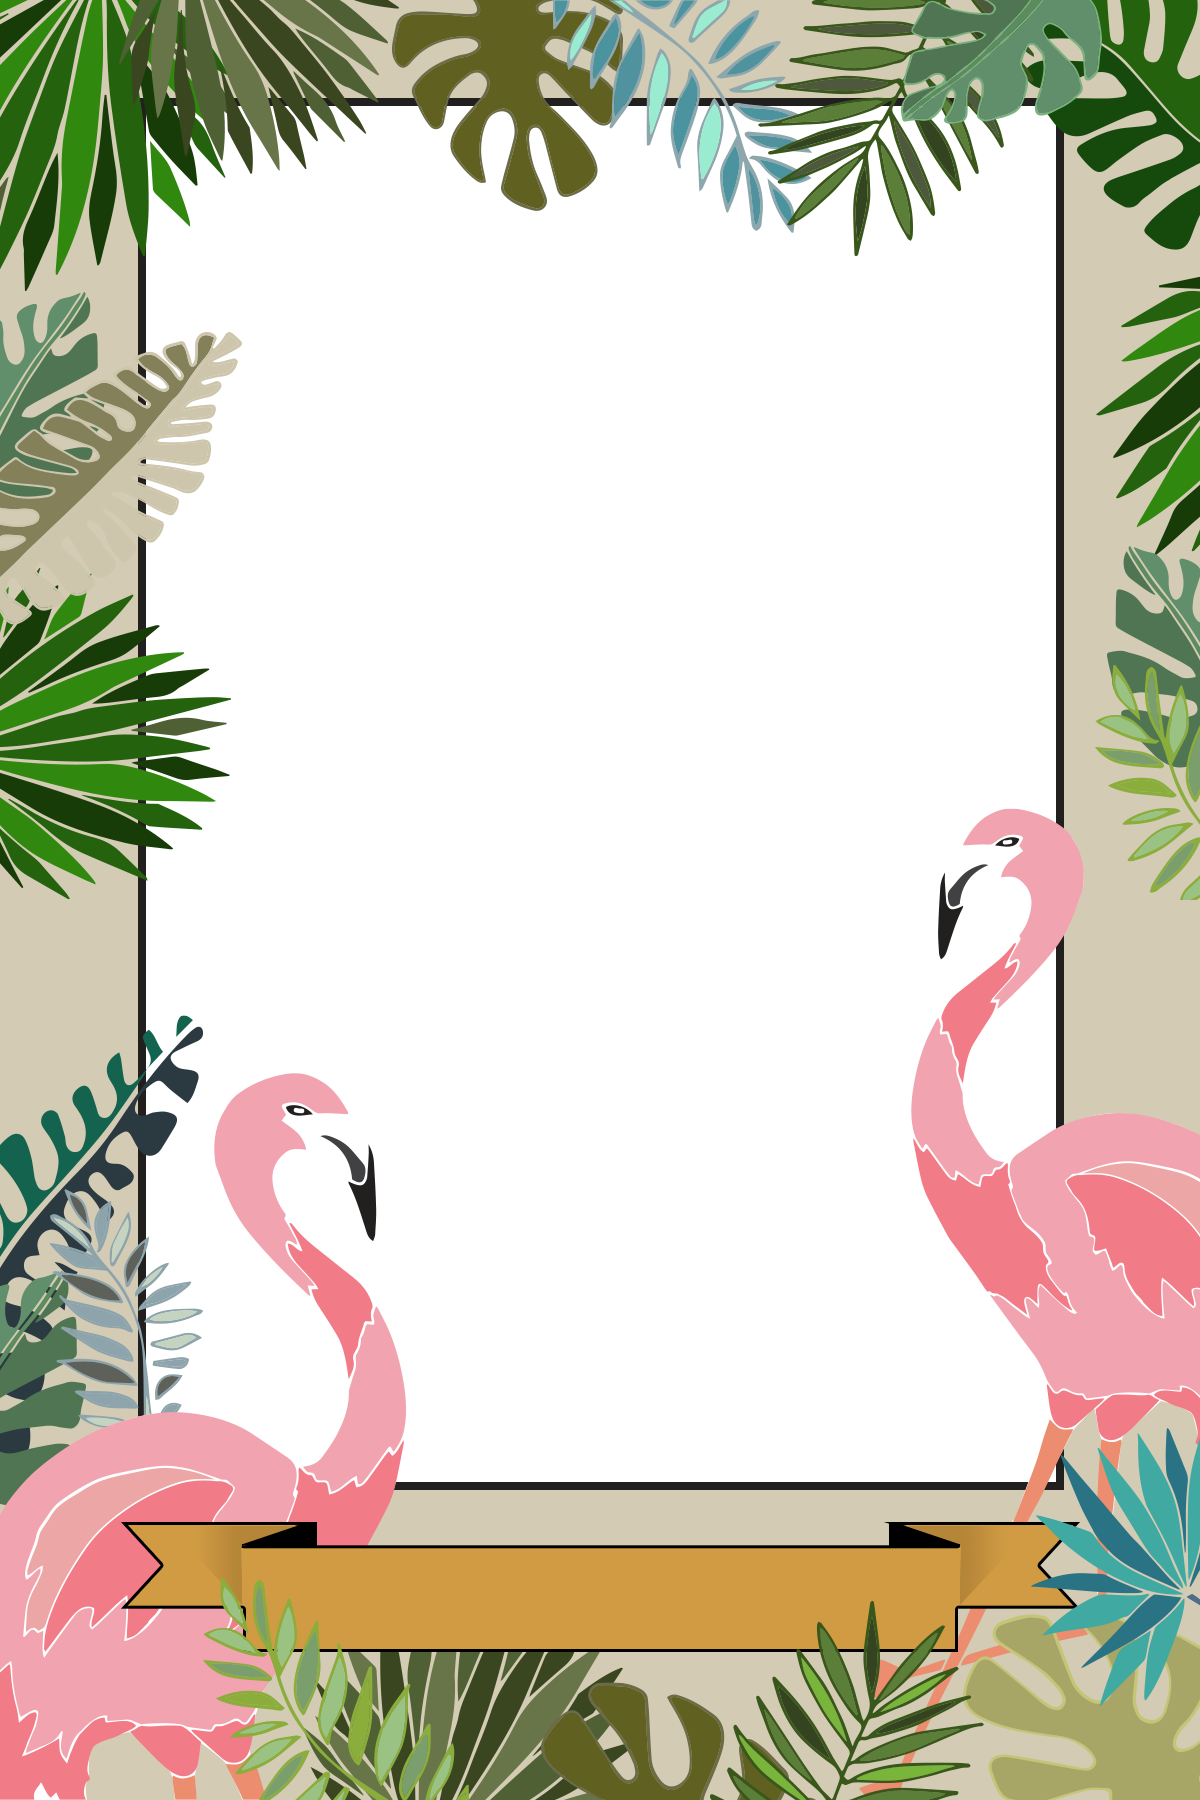 flamingo1.png